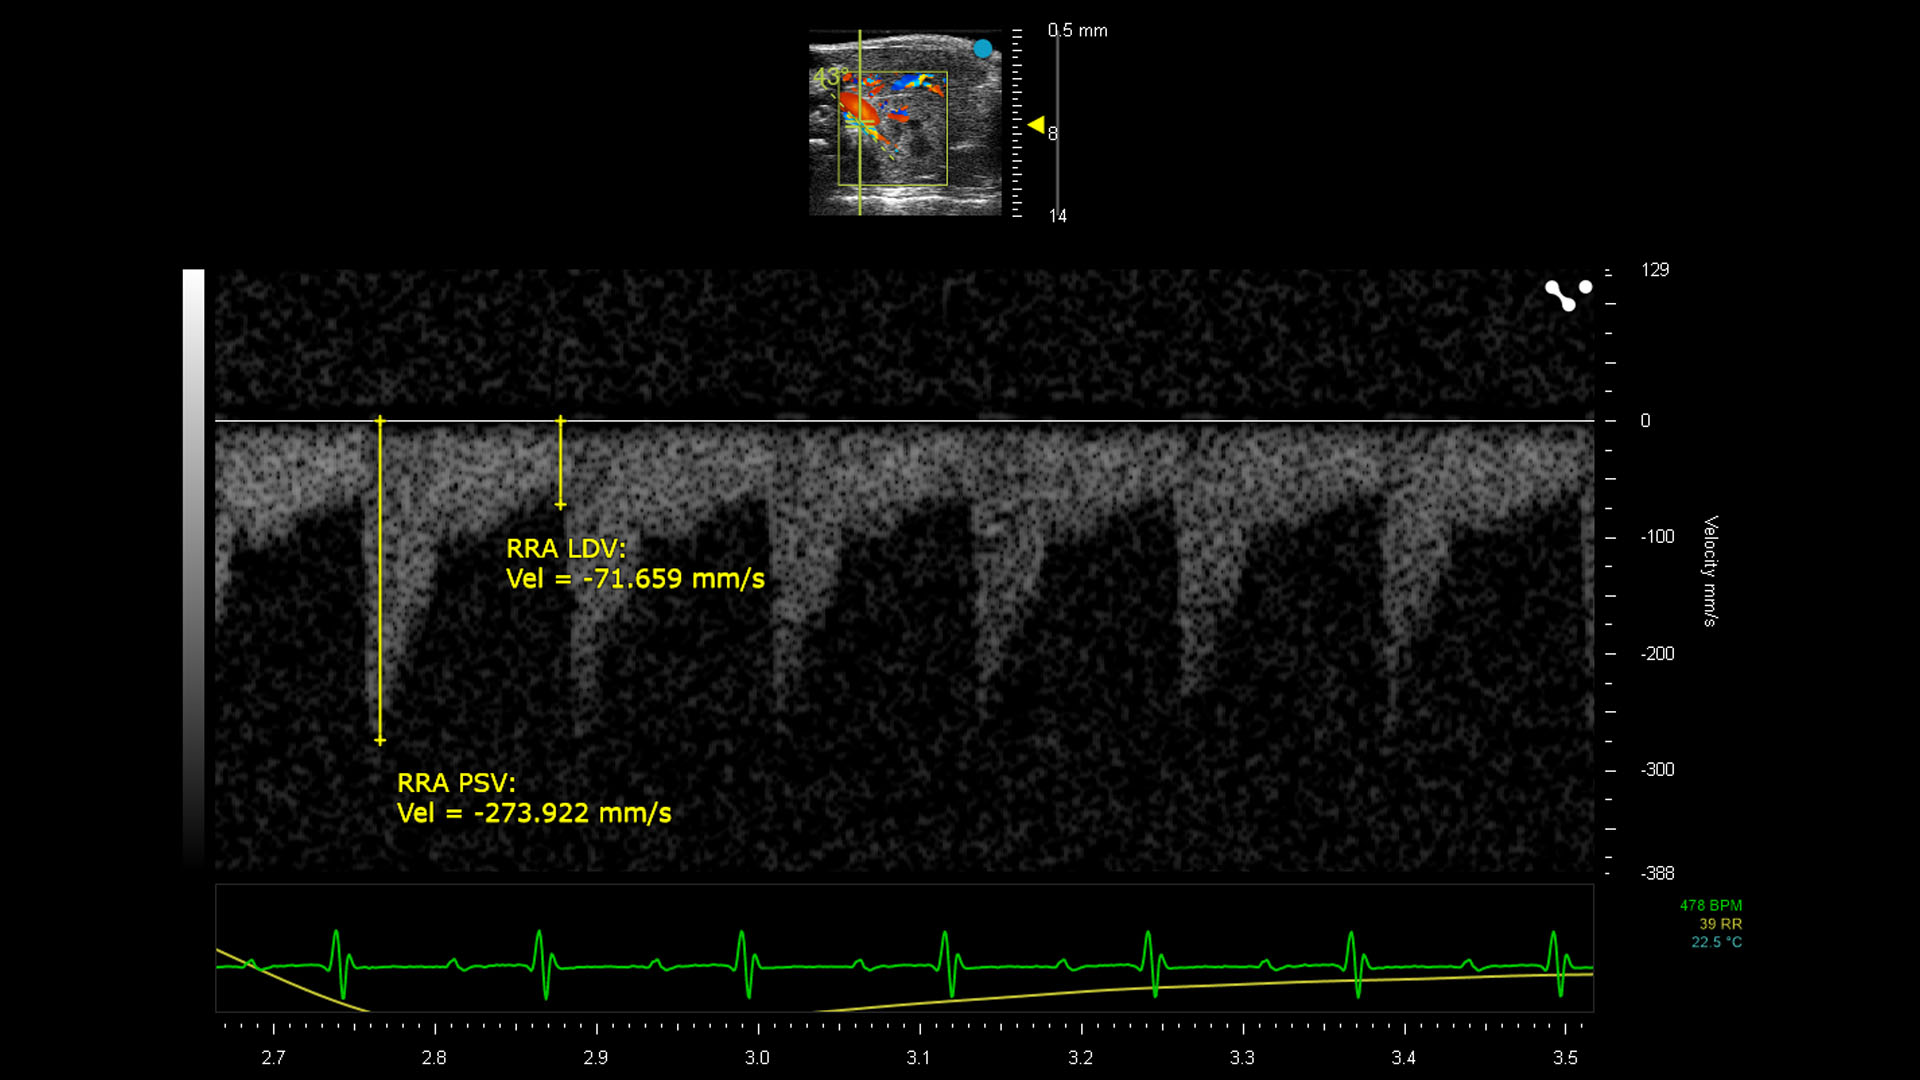 PW Doppler measurements for renal artery flow